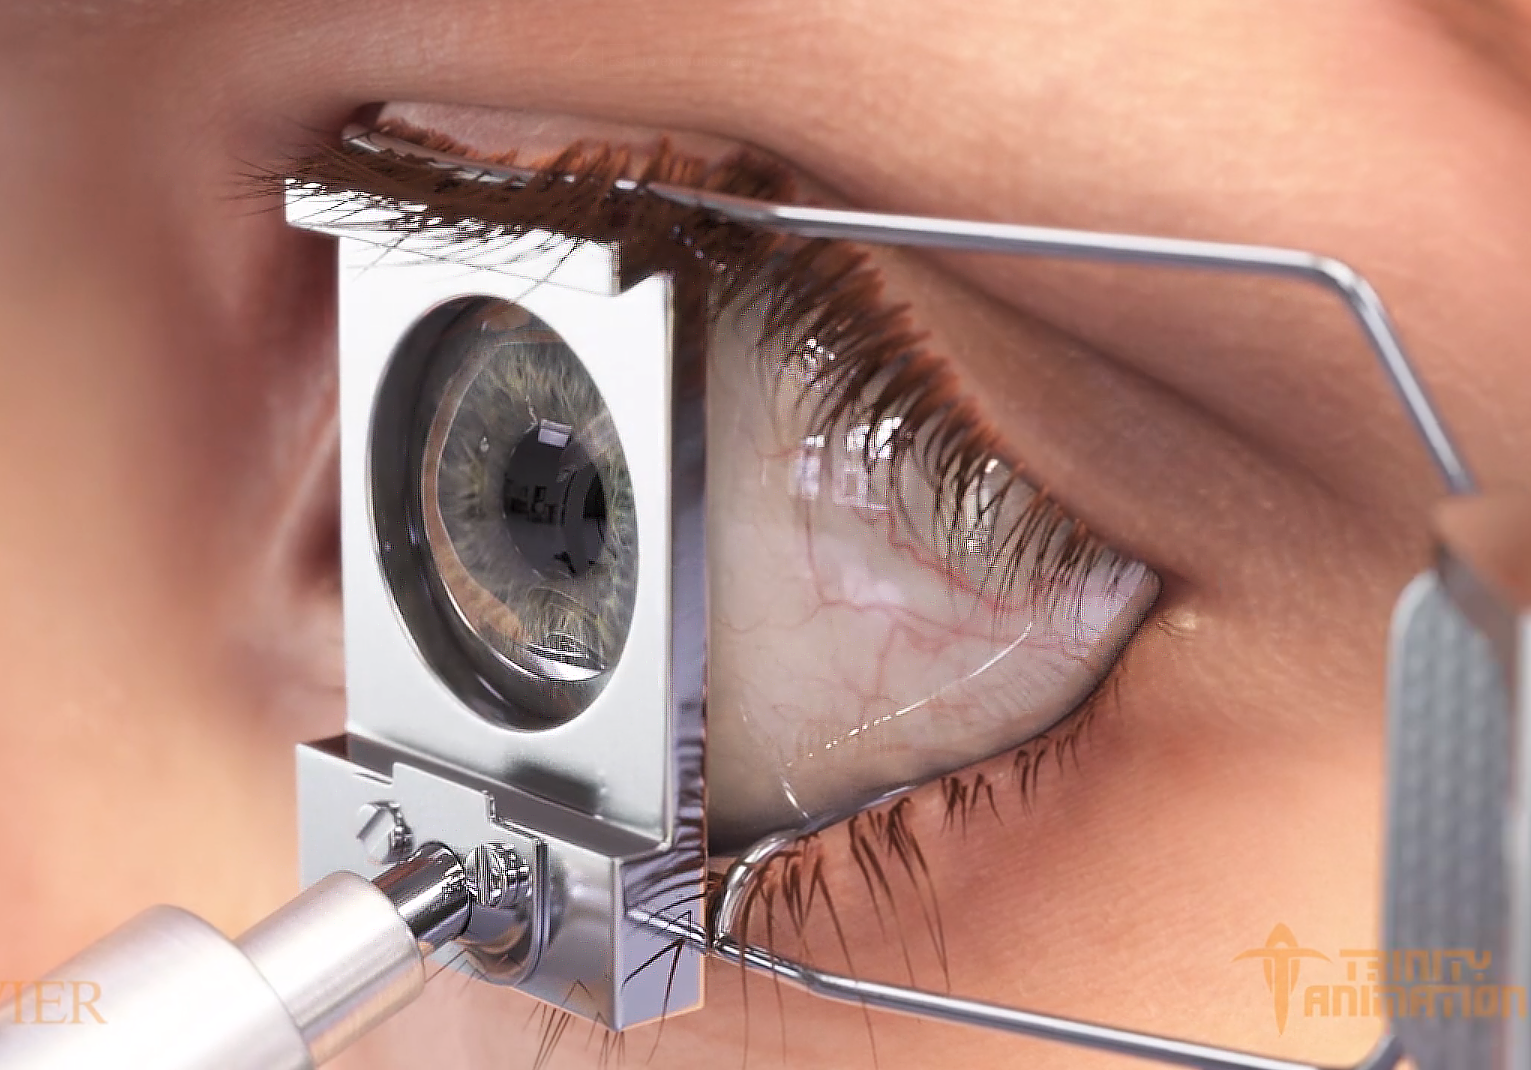 Eye replacement surgery  rboneachingjuice